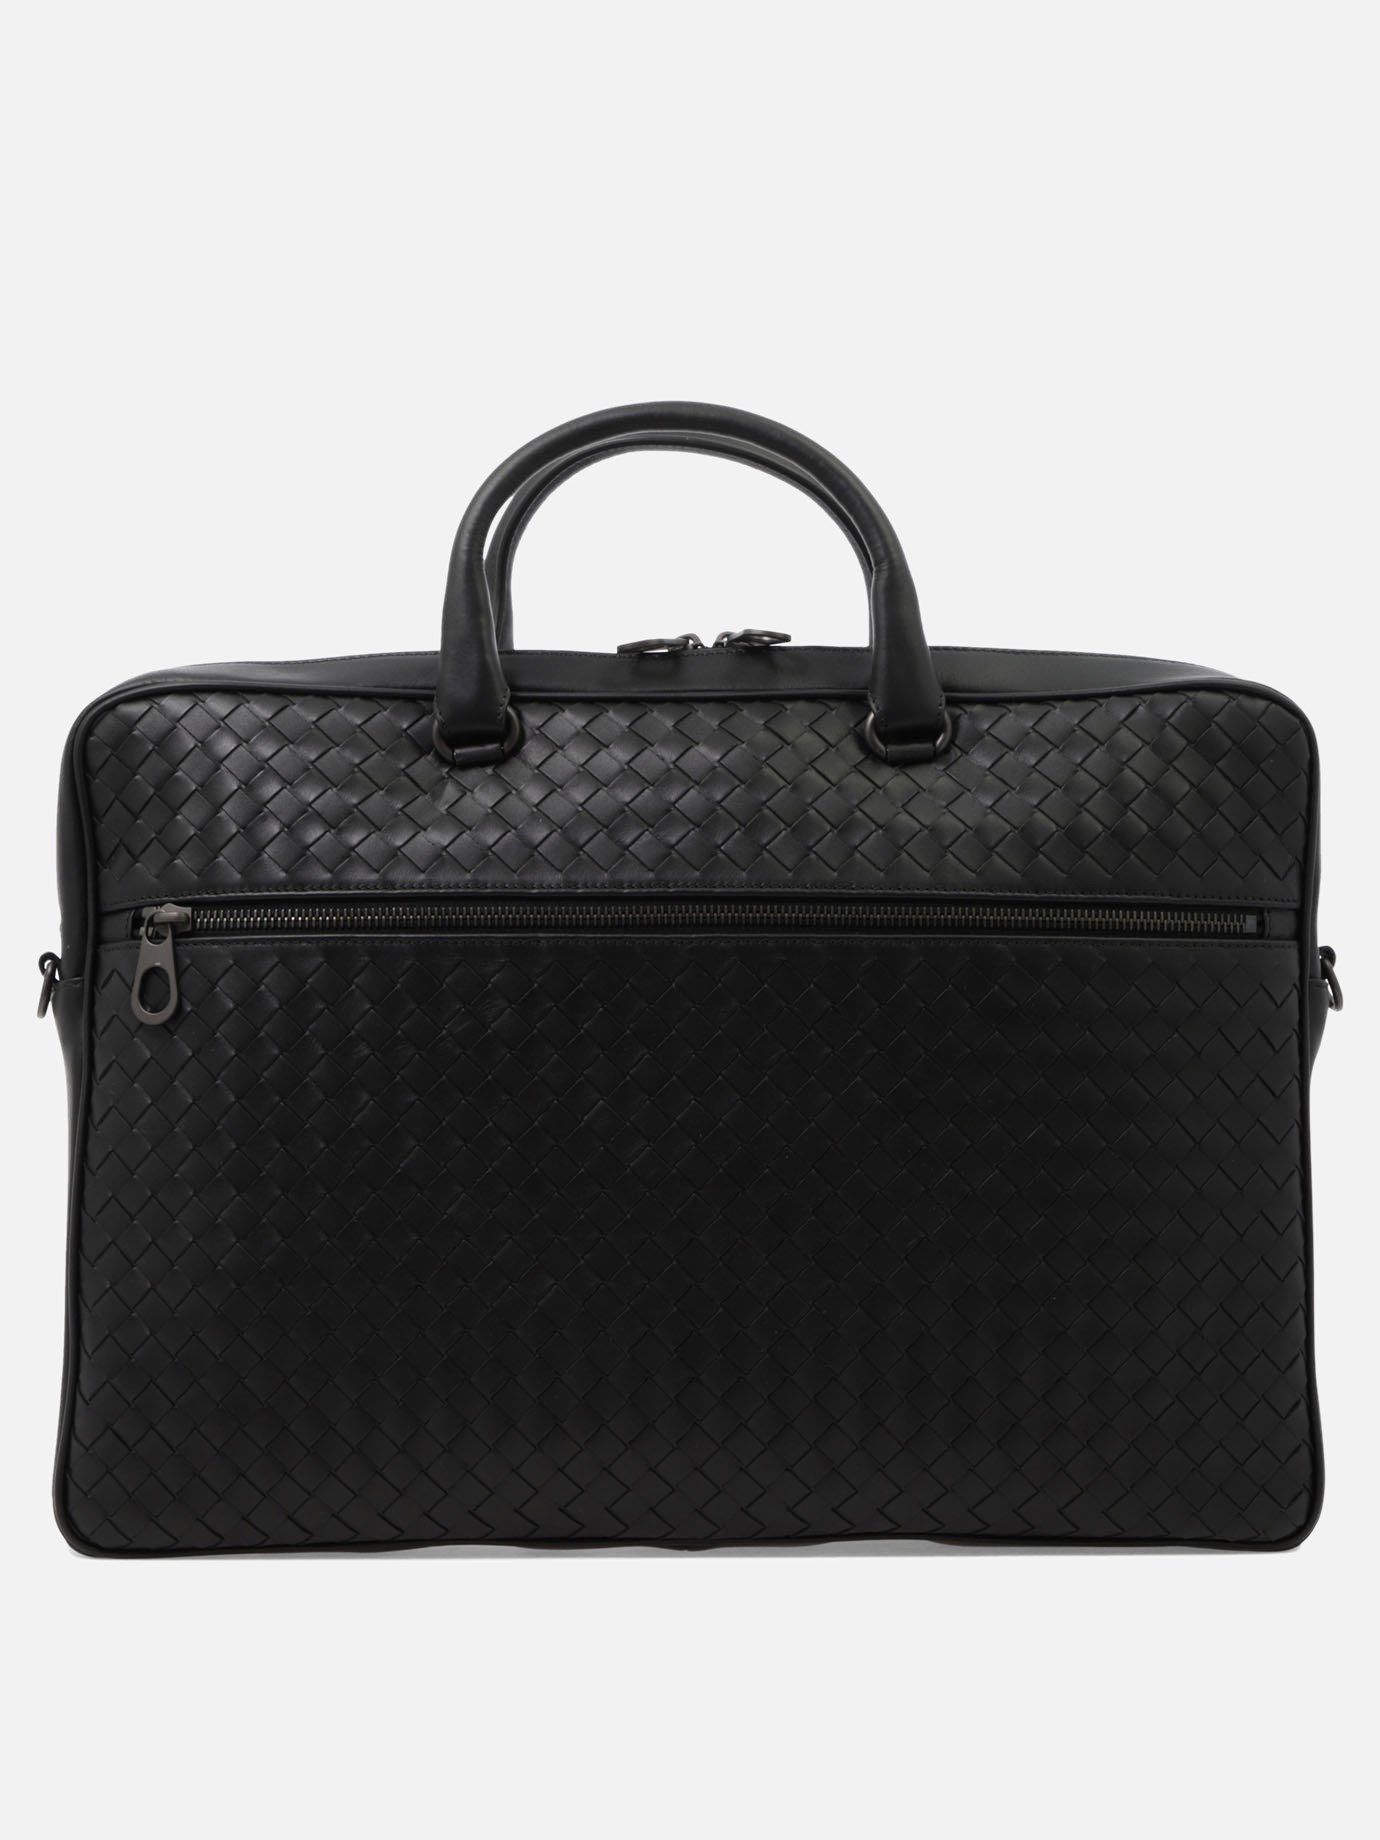 Woven leather handbagby Bottega Veneta - 2